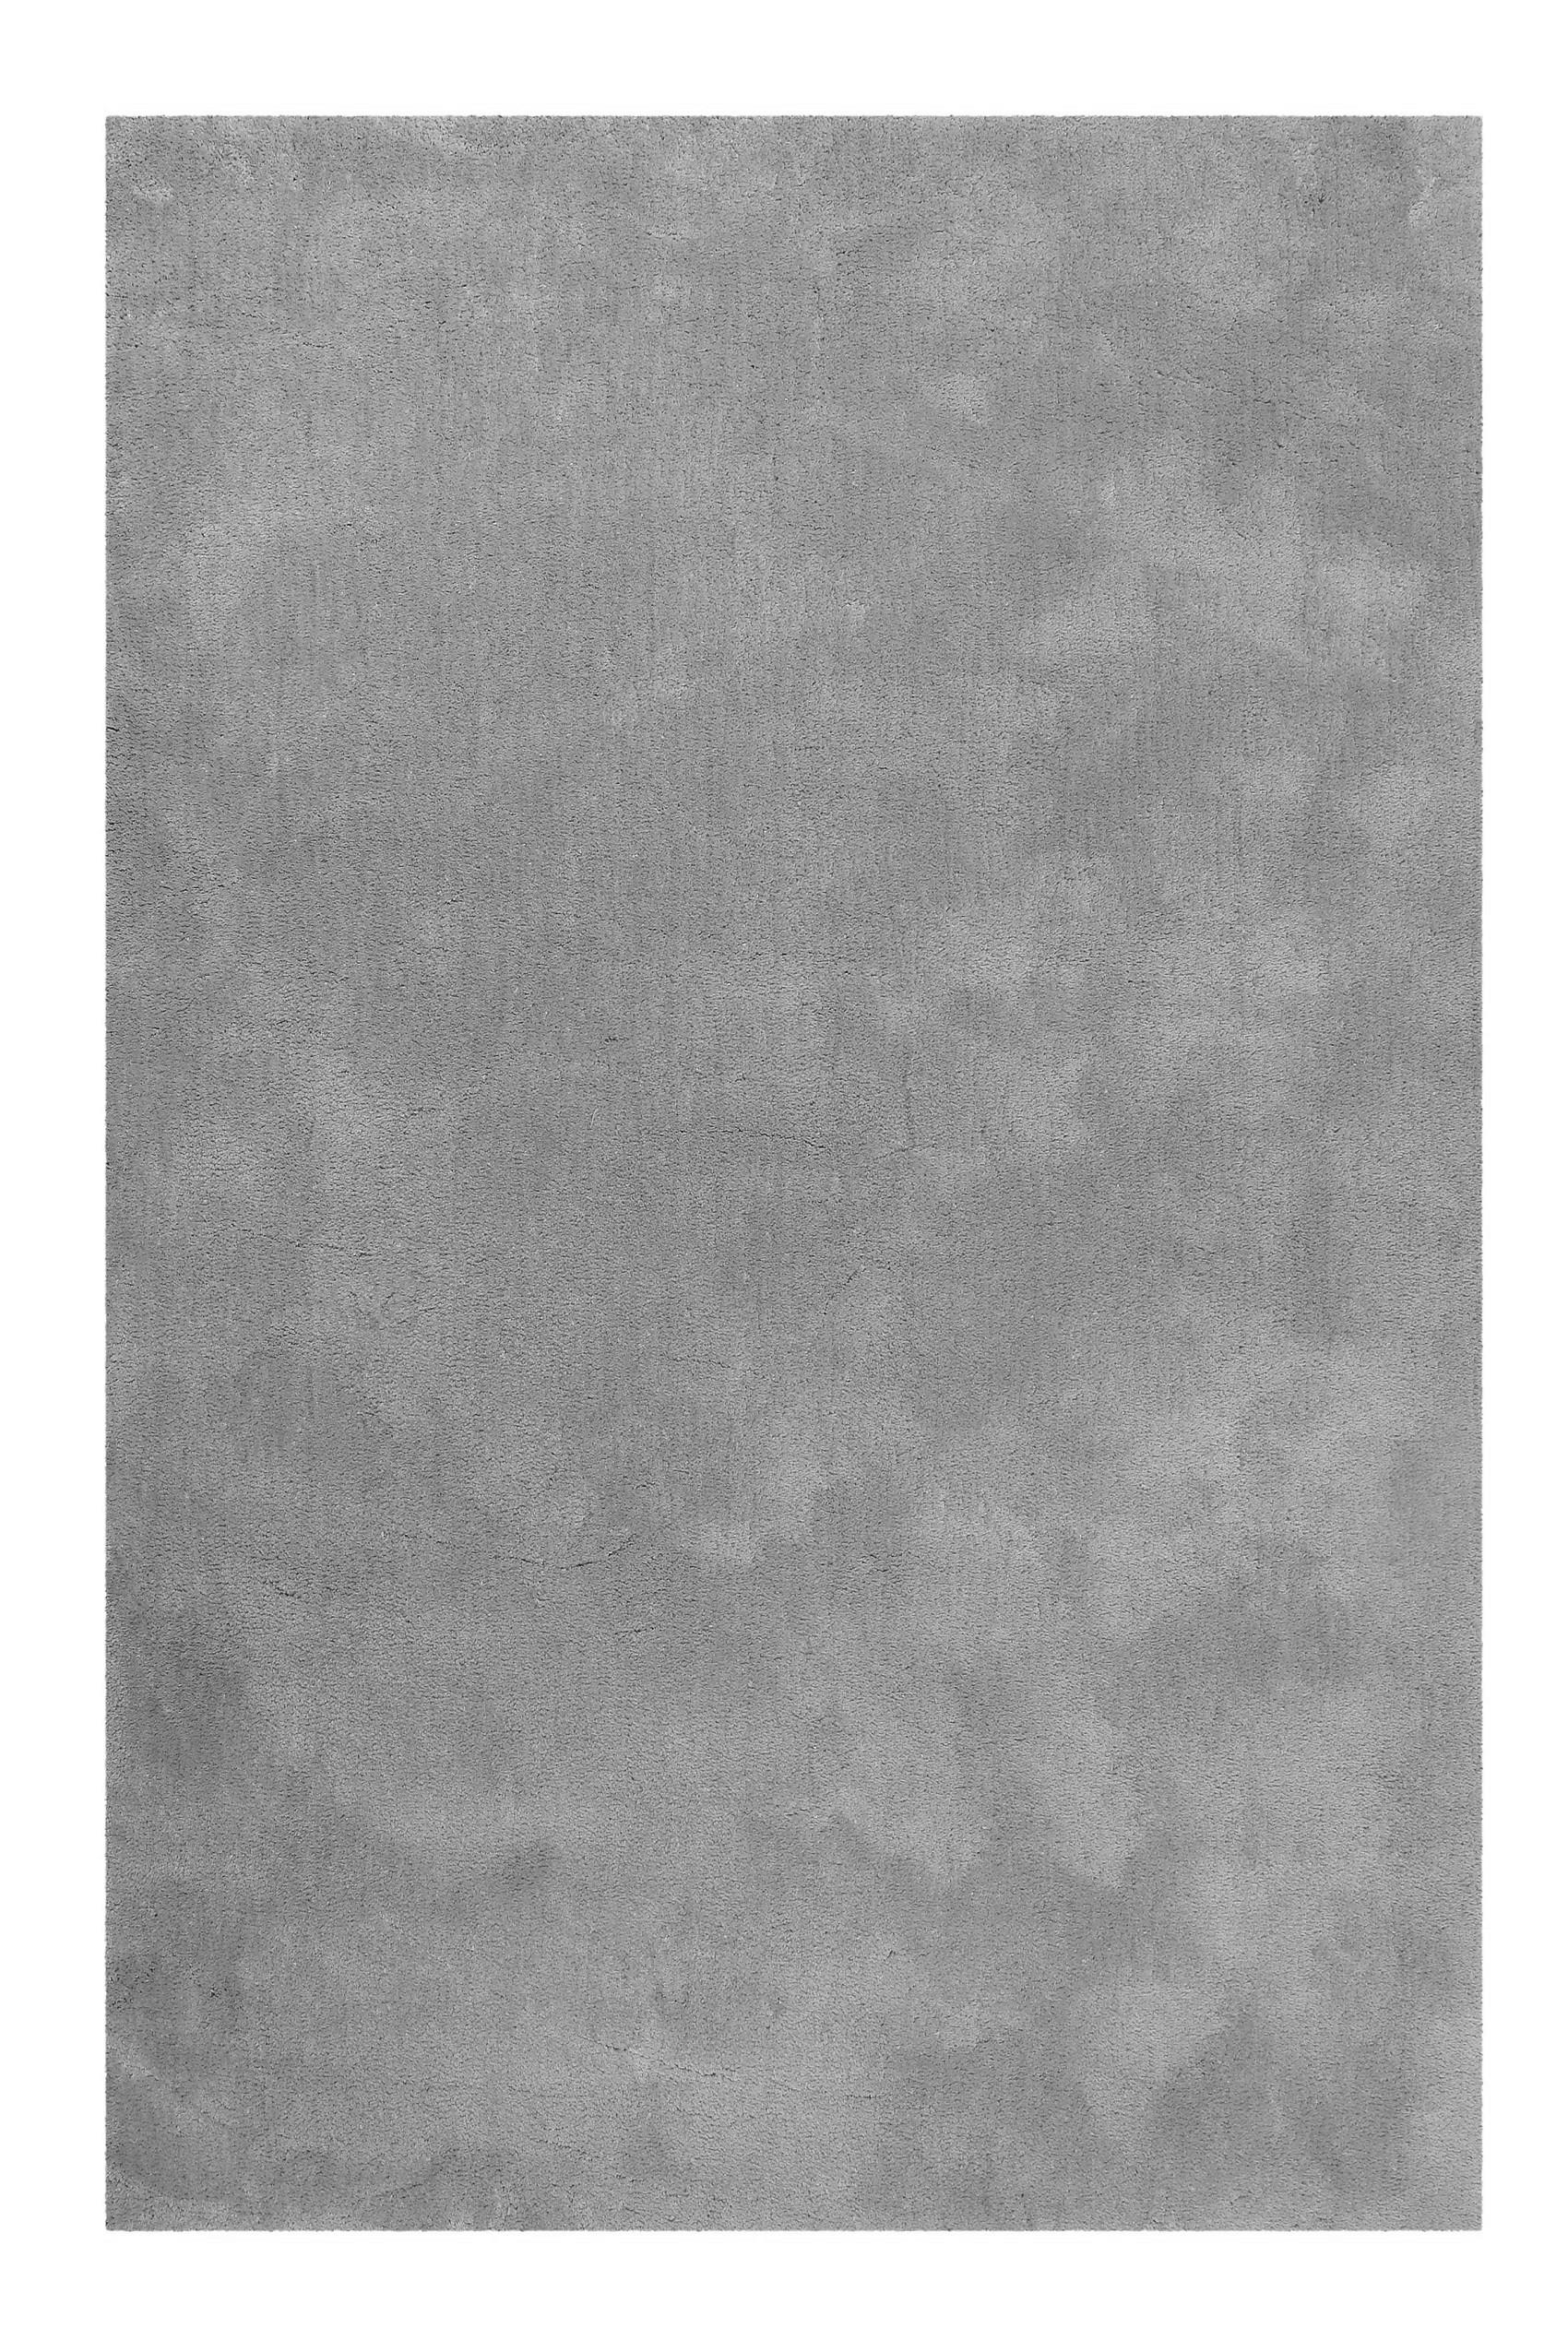 HOCHFLORTEPPICH 120/170 cm Emilia  - Grau, Design, Textil (120/170cm) - Novel